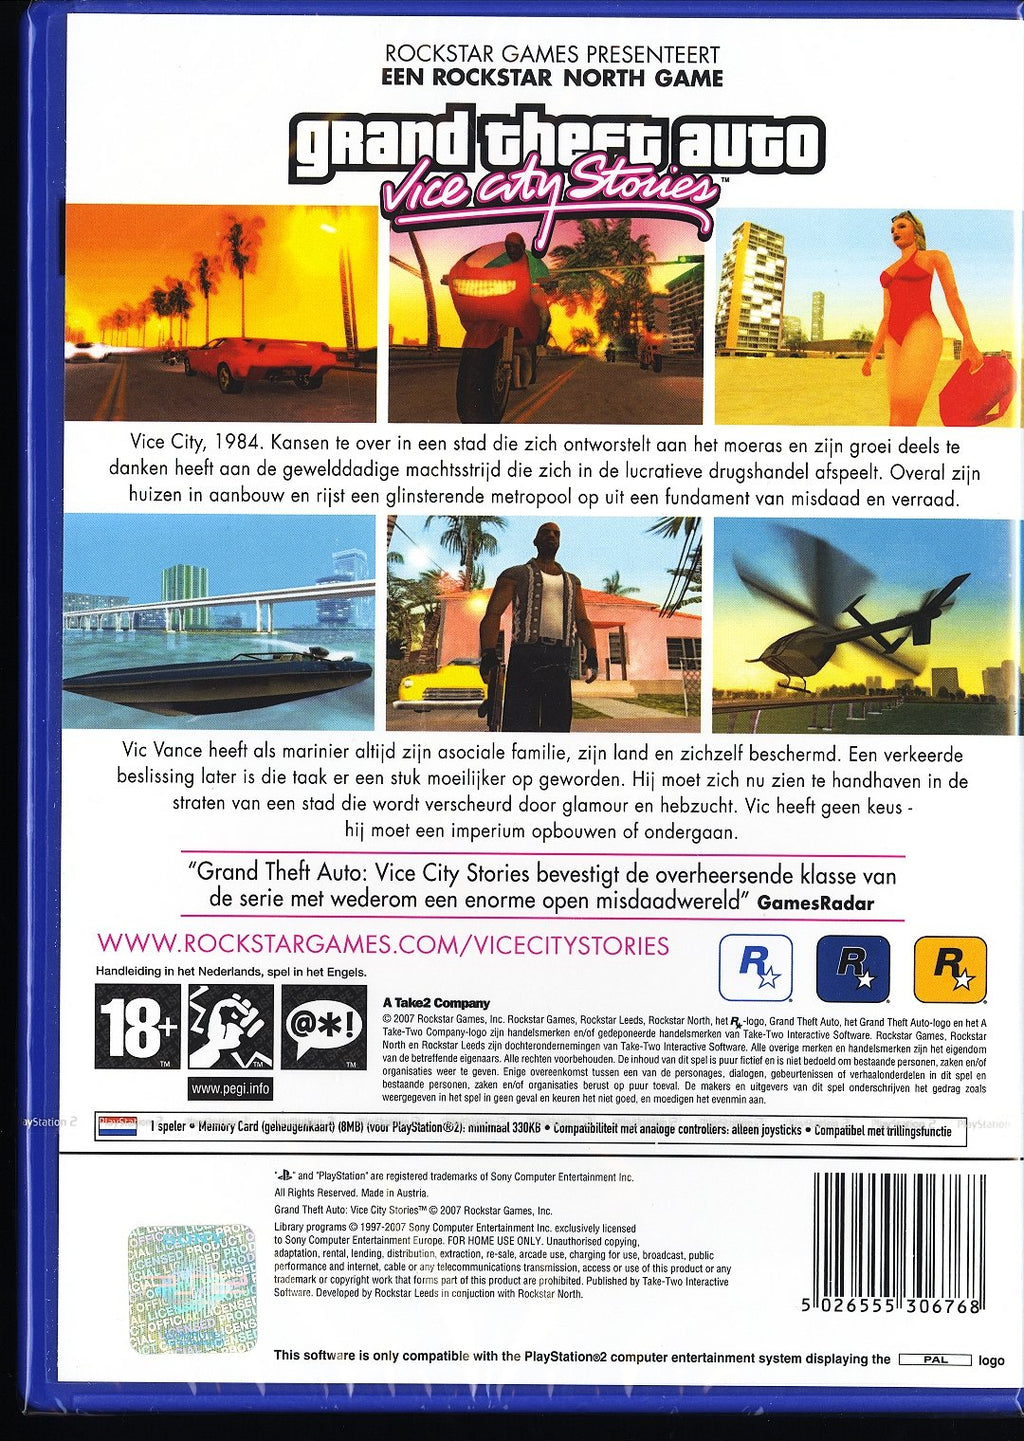 Grand Theft Auto III, Sealed, New PS2 GTA Playstation 2